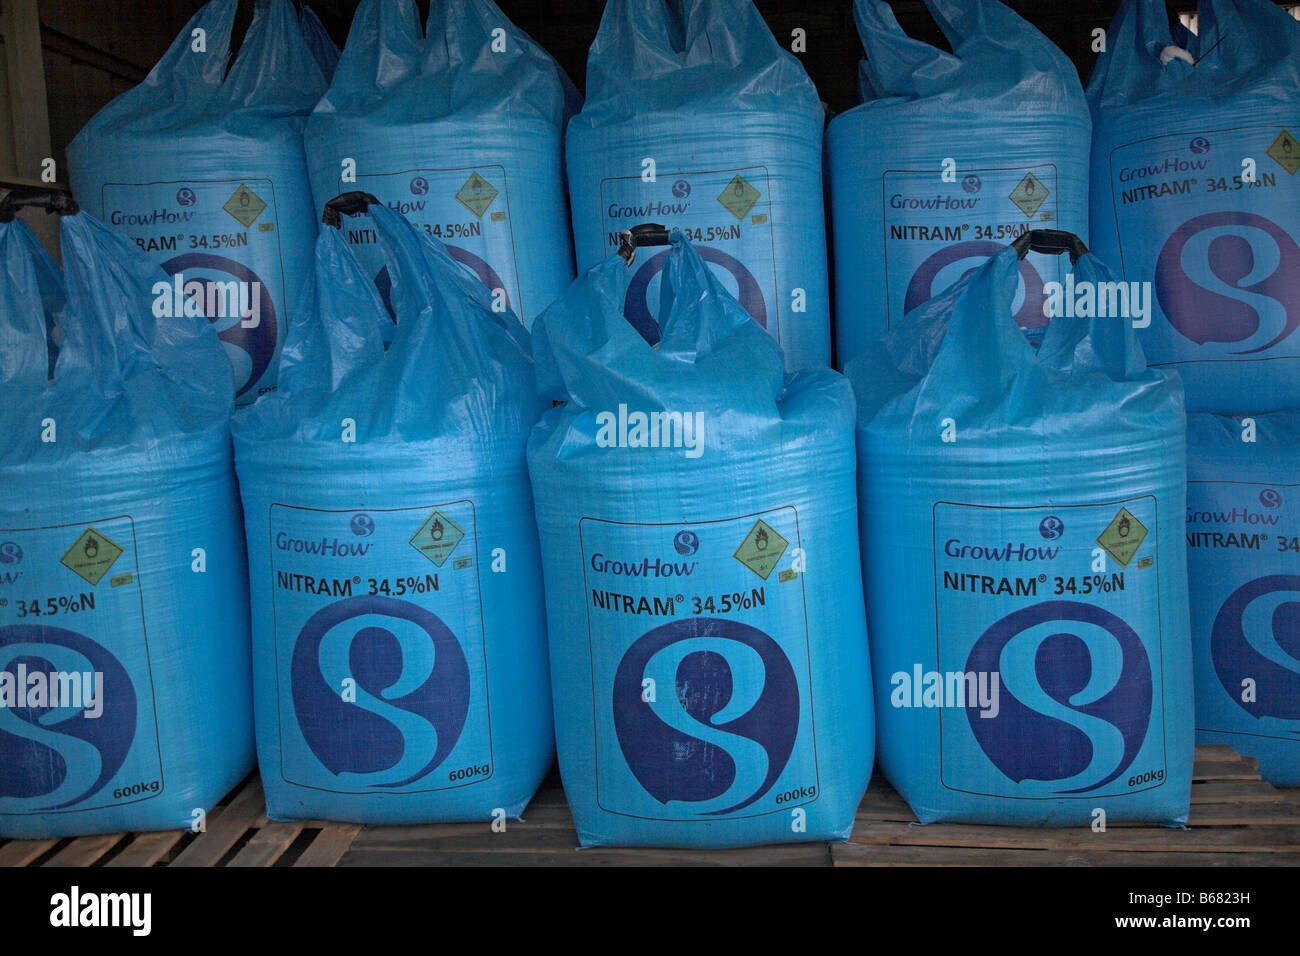 Large blue bags of Nitram nitrate fertiliser Stock Photo